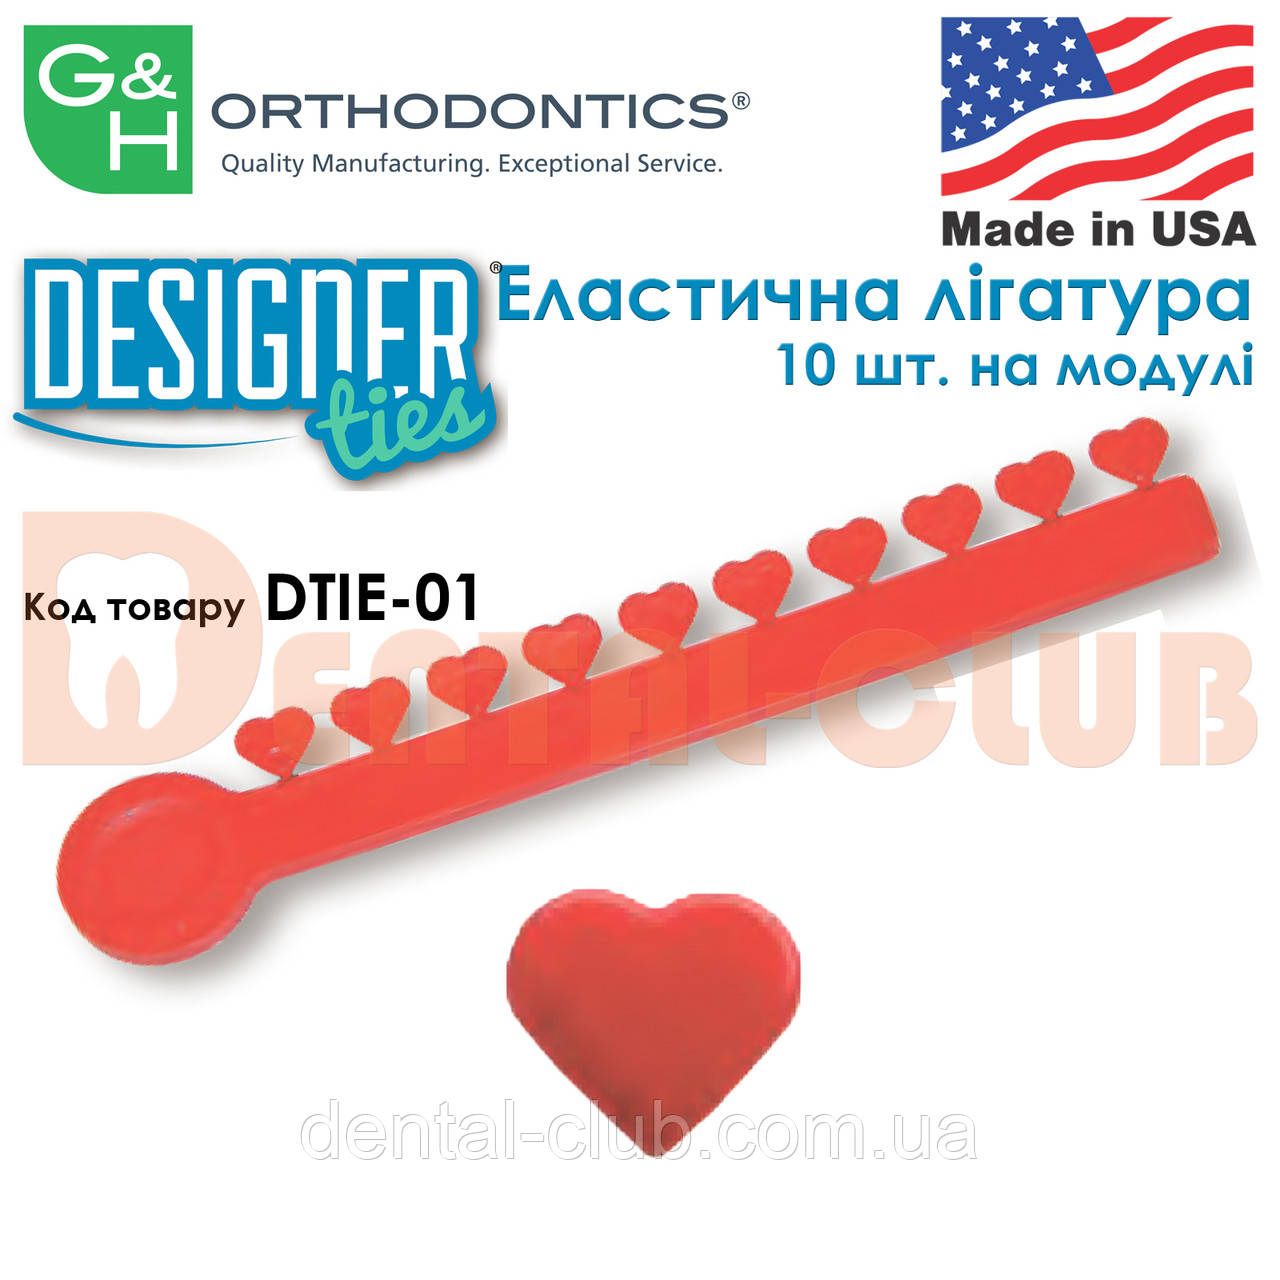 Дизайнерська еластична лігатура 10 шт. на модулі DesignerTies® (G&H Orthodontics) США, без латексу